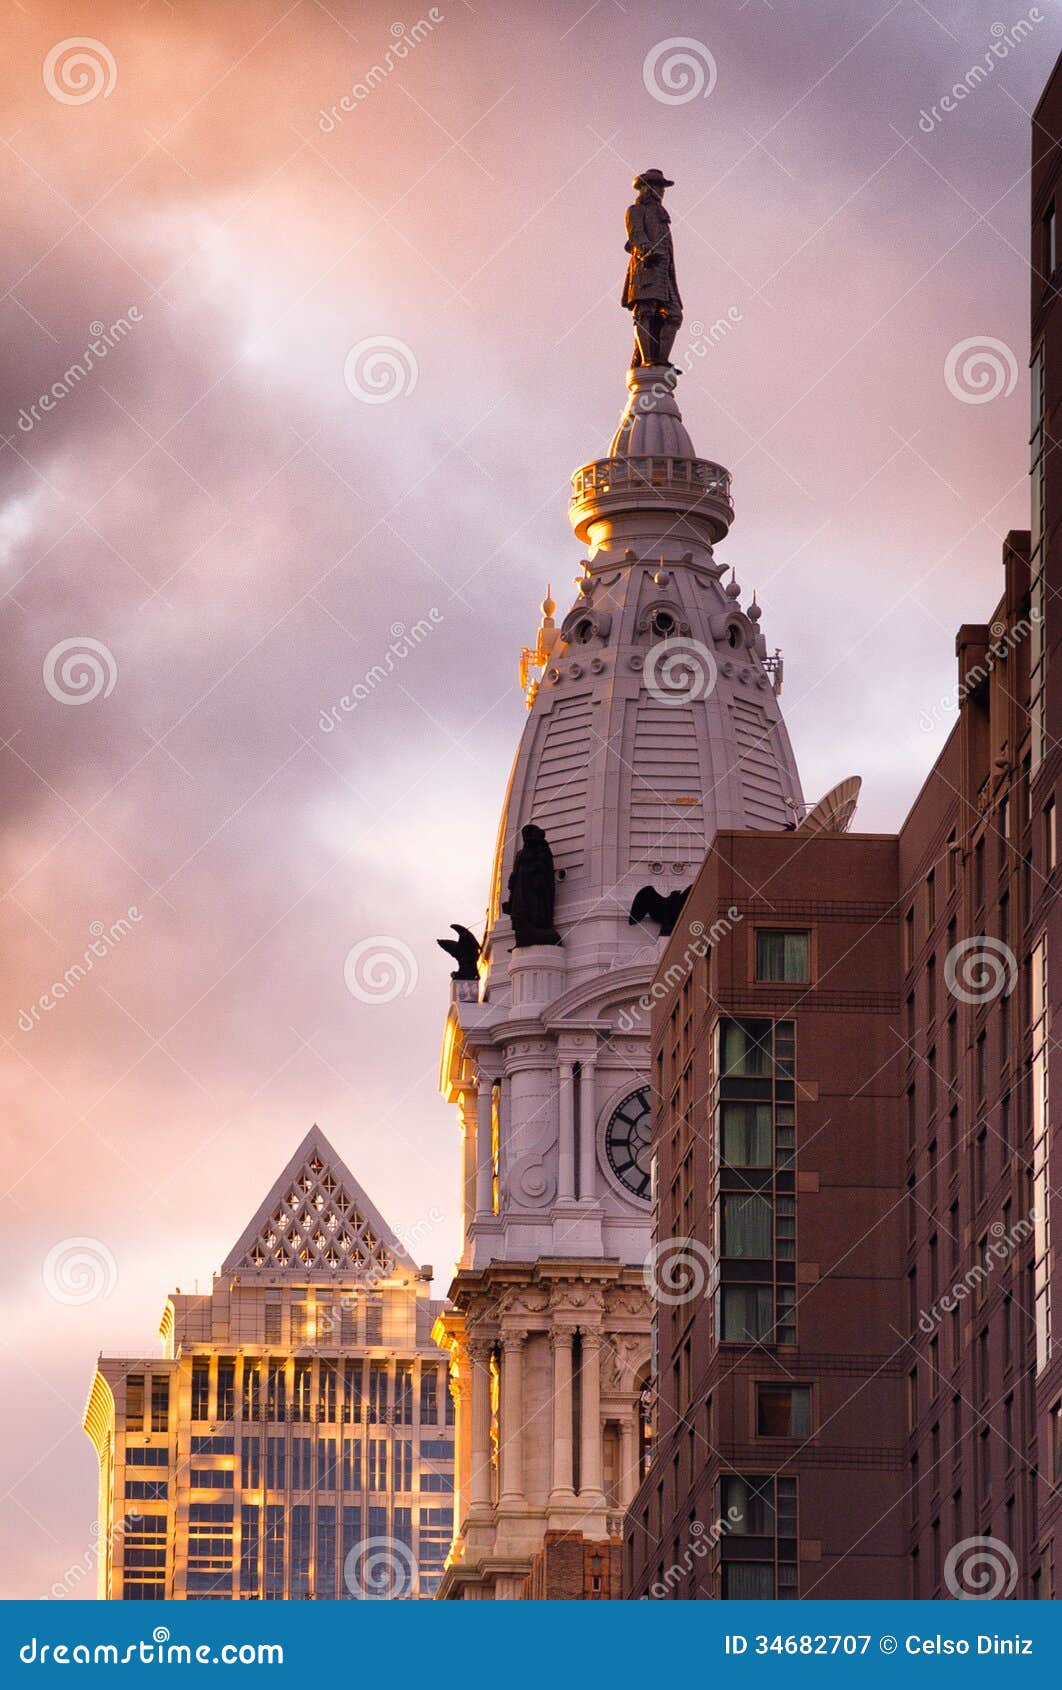 city hall of philadelphia